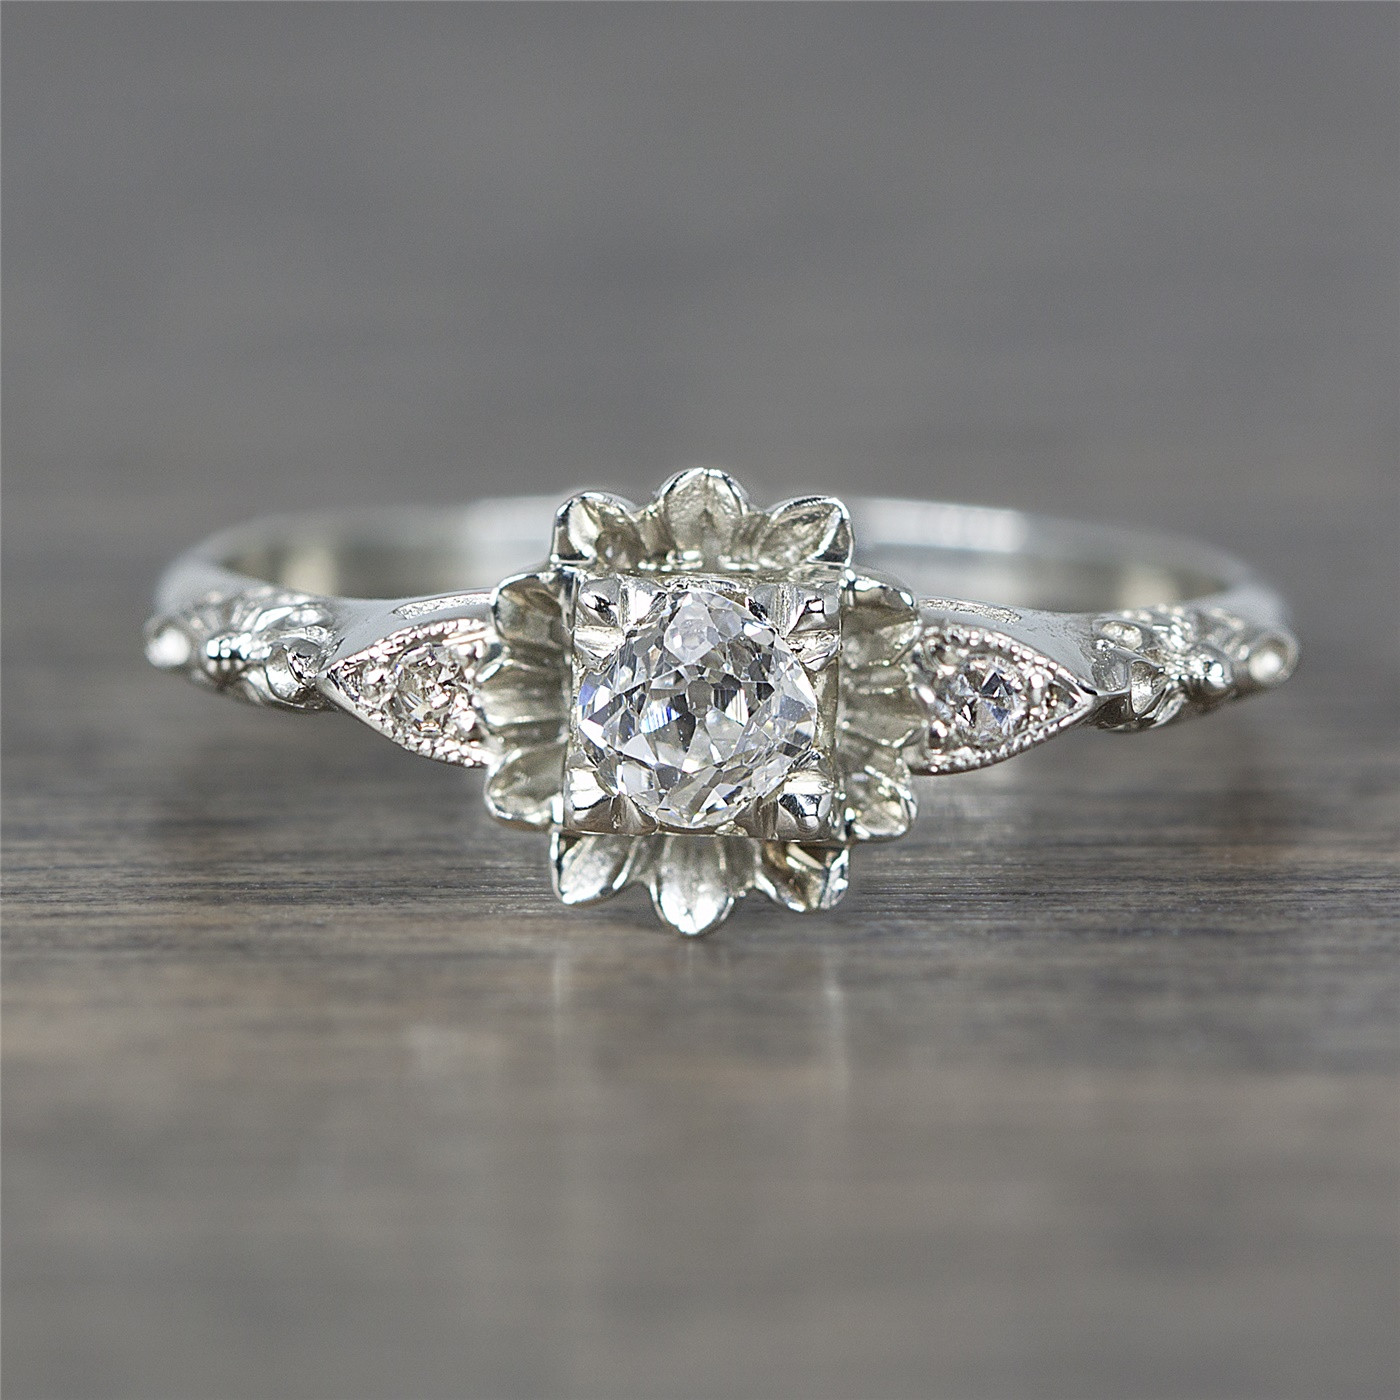 Vintage Diamond Engagement Ring
 1920 s White Gold & Diamond Flower Vintage Engagement Ring